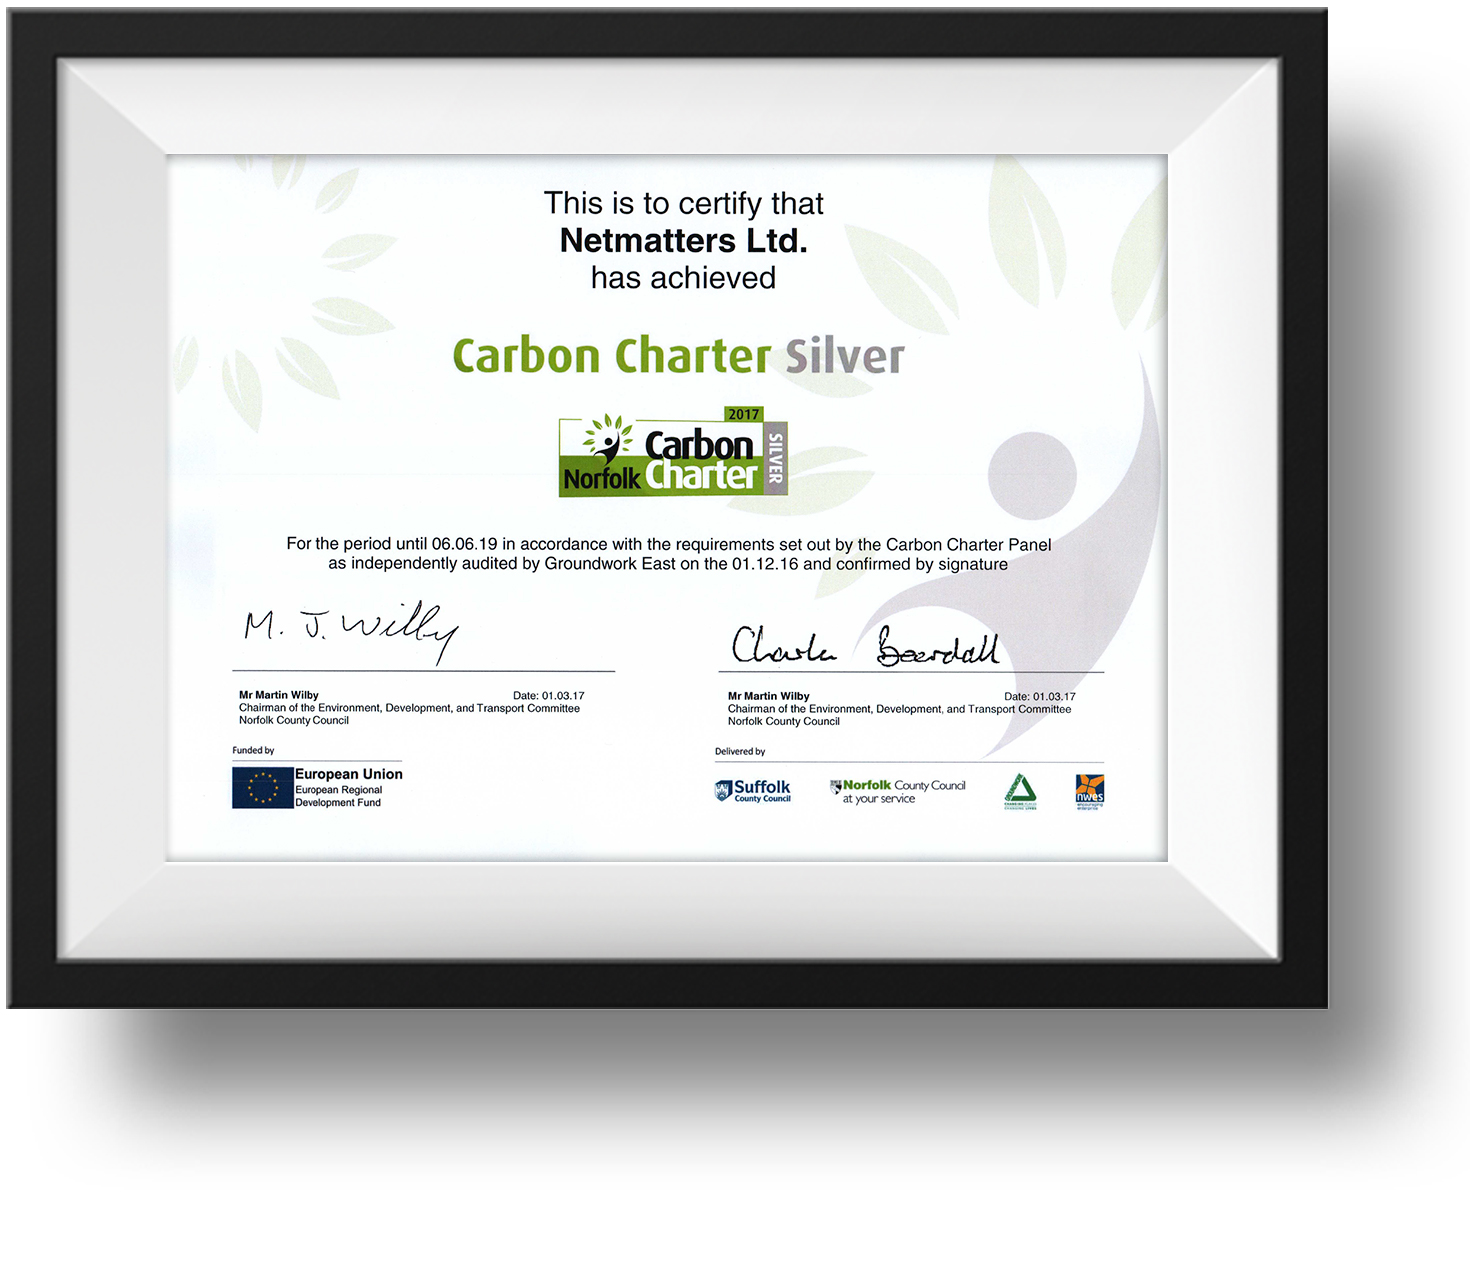 Netmatters - Achieved Carbon Charter Silver Award - Norwich, Norfolk, Suffolk, Cambridge and London 